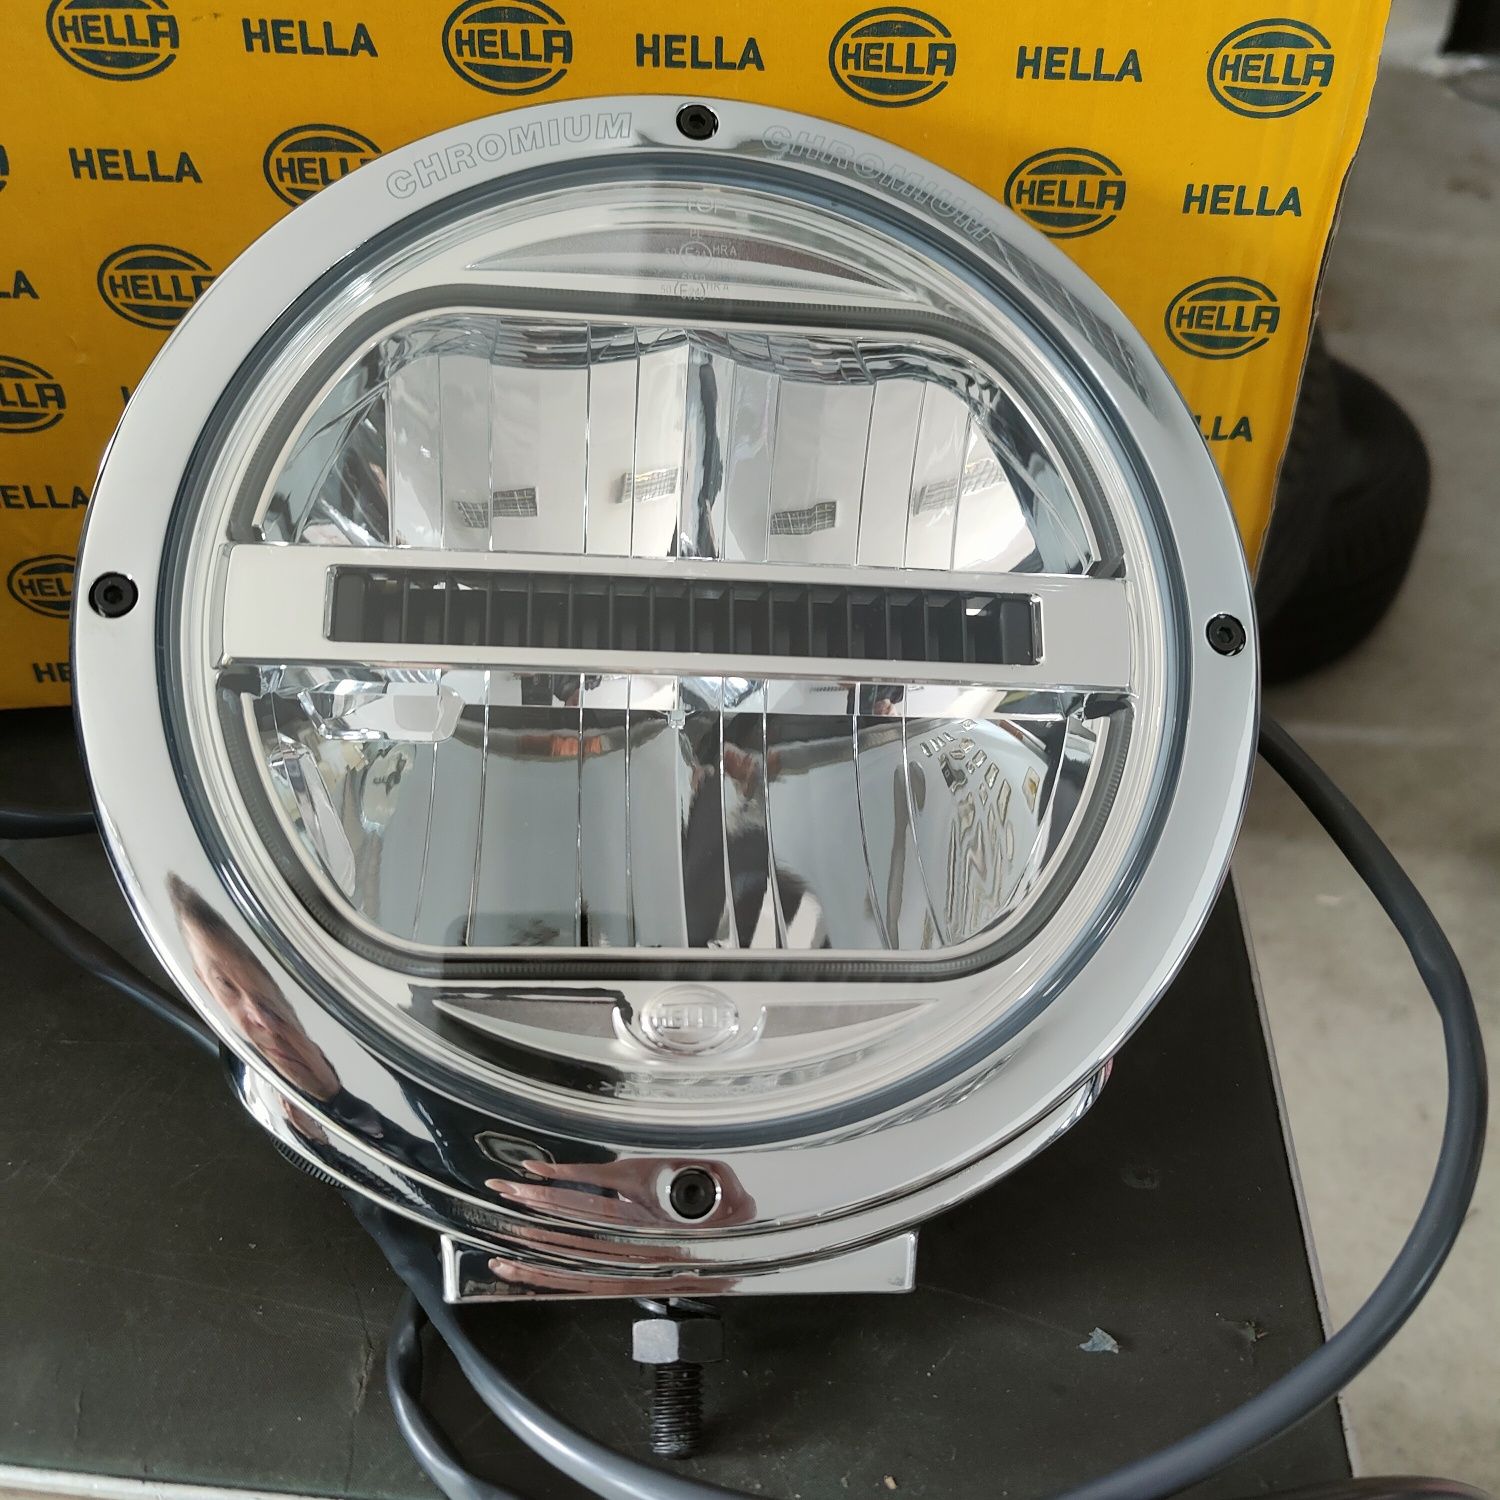 Hella nowy reflektor dalekosiężny LED halogen do ciężarówki chrom 24V